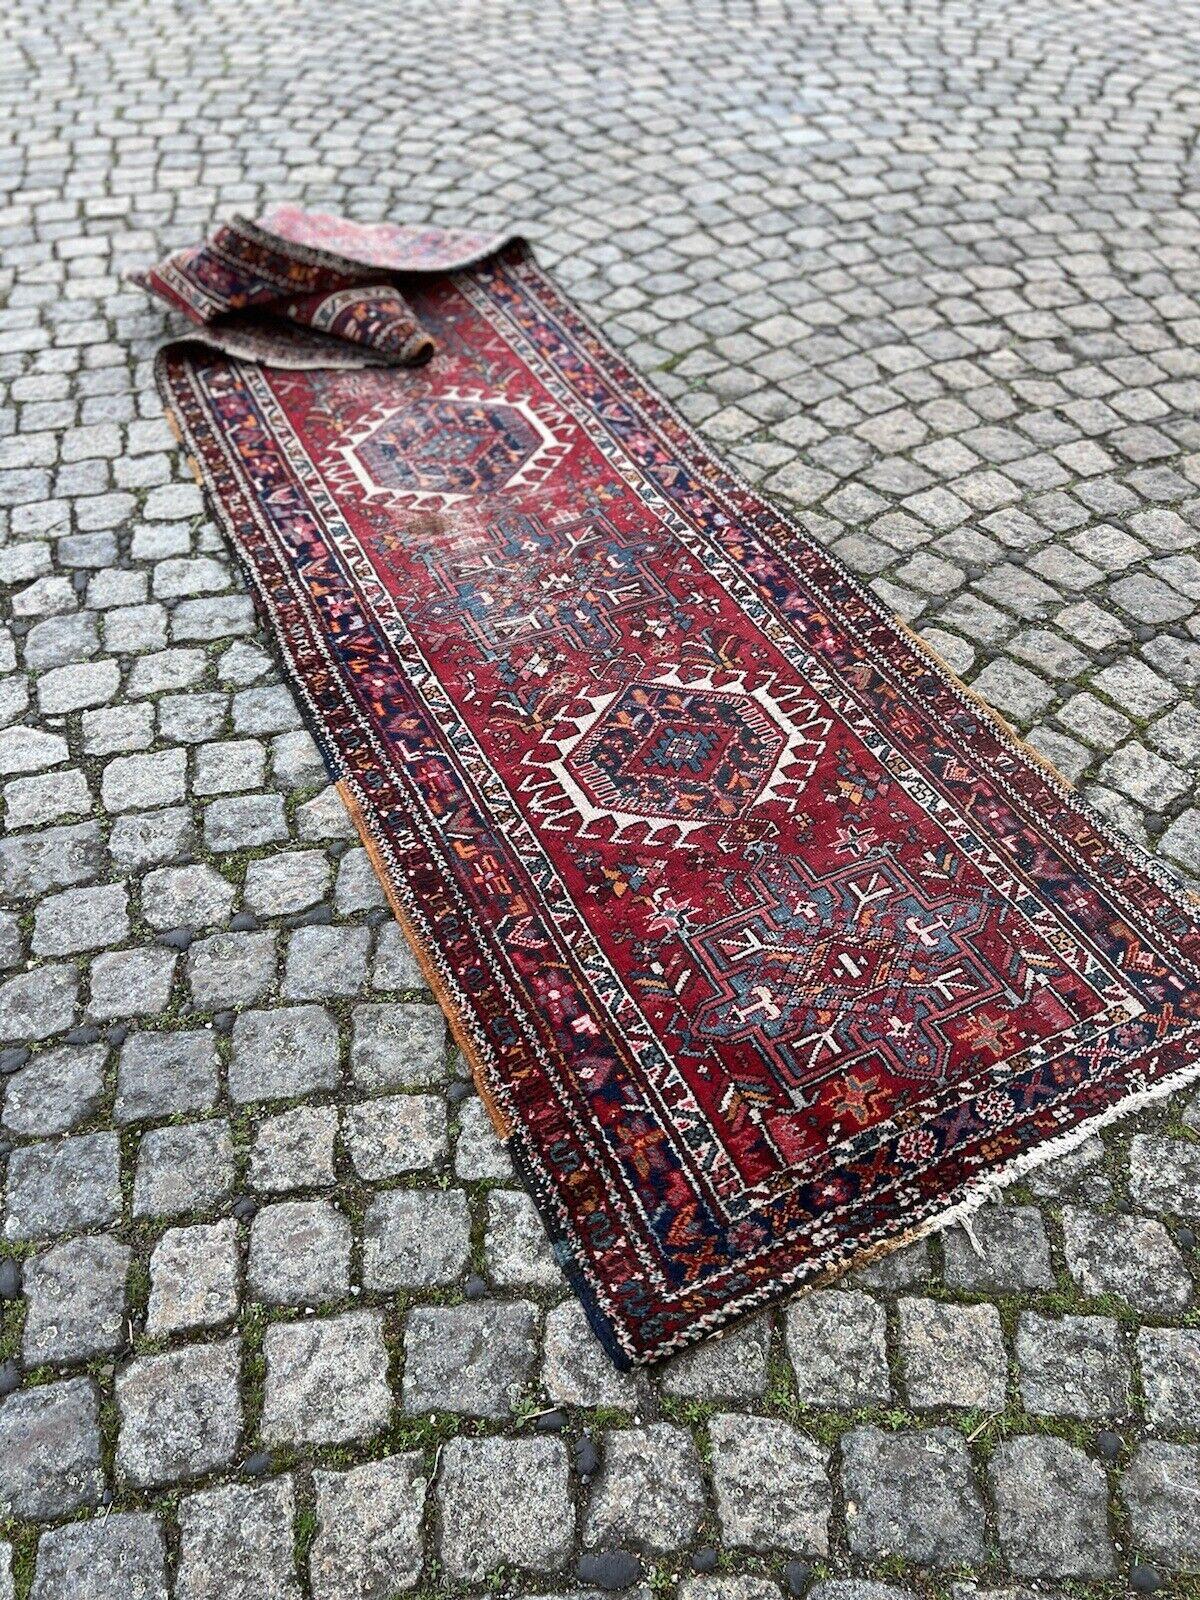 Handmade Antique Persian Style Karajeh Runner Rug 2.9' x 11.2', 1920s - 1S57 For Sale 5